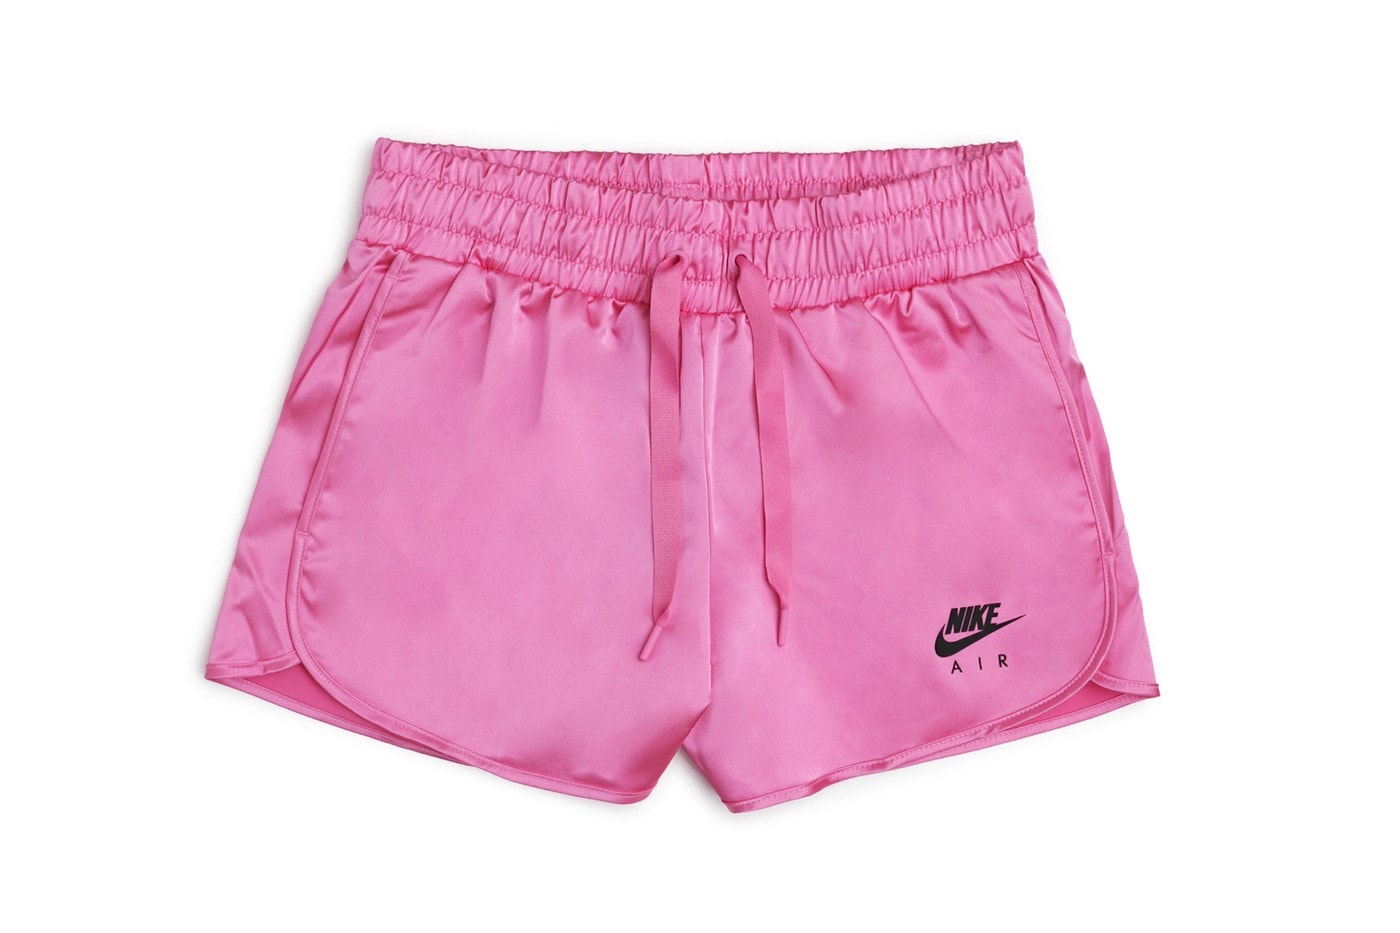 nike sportswear air satin shorts release